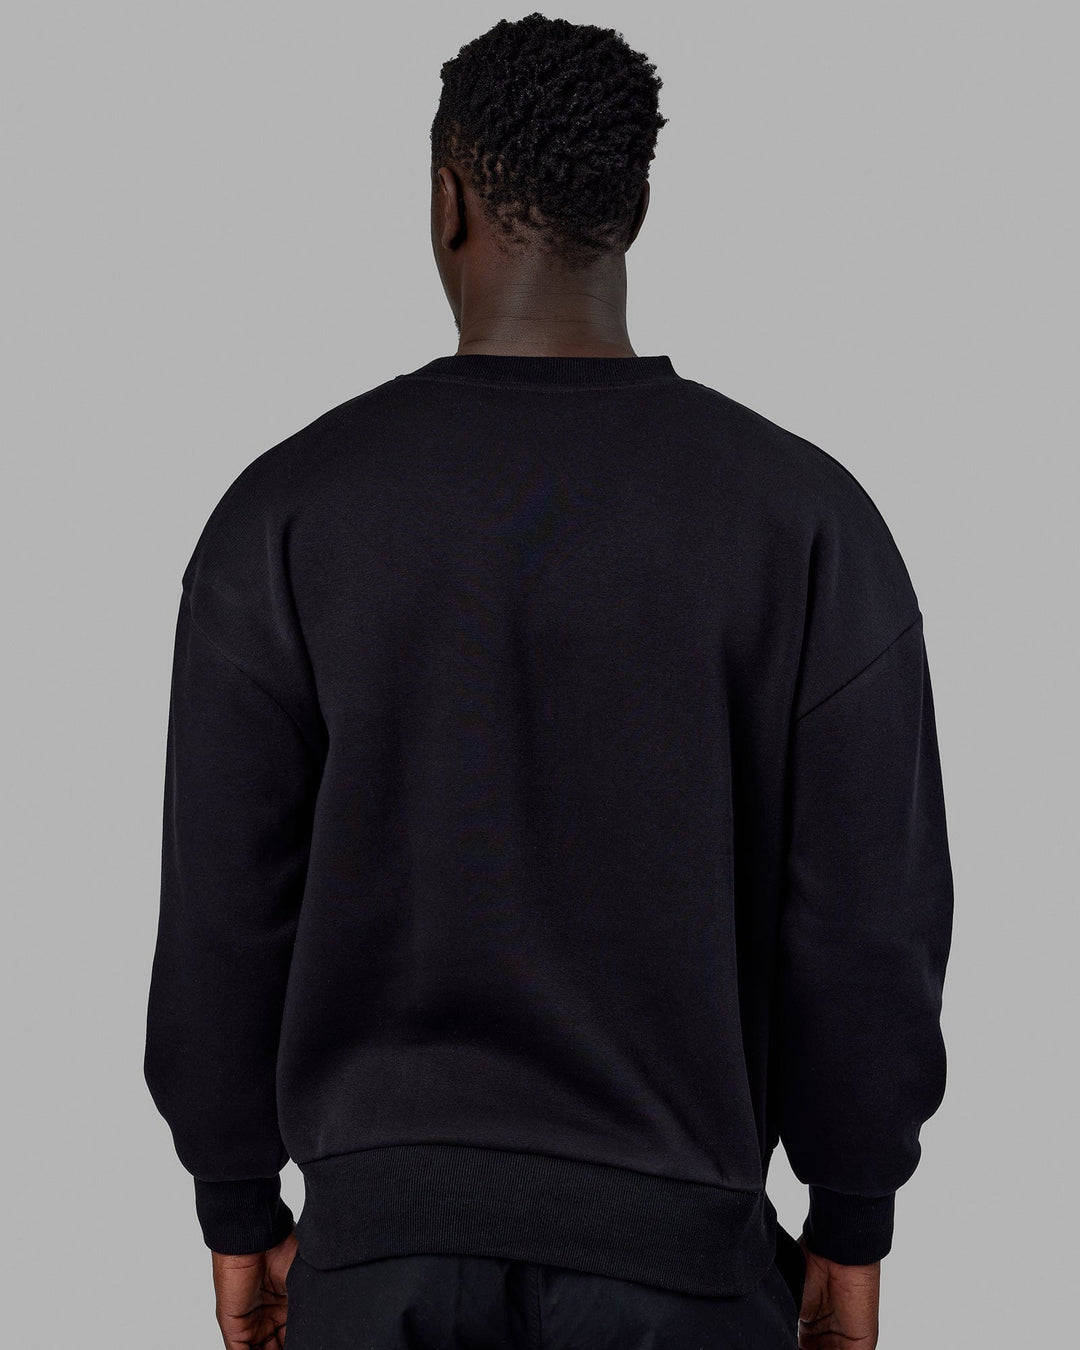 Man wearing Unisex 1% Better Sweater Oversize - Black-White